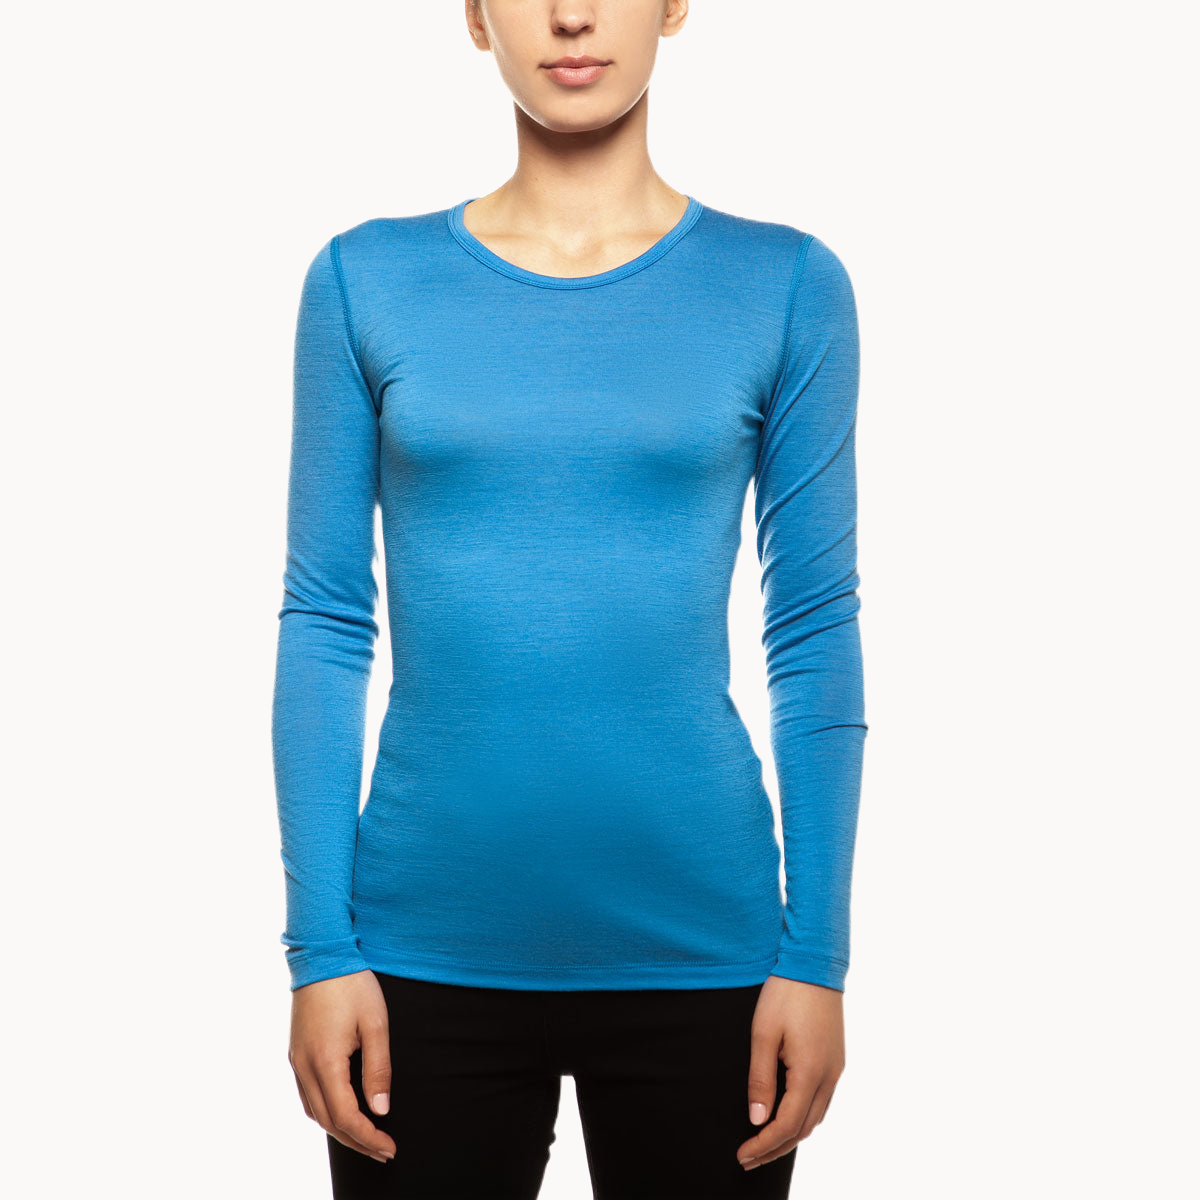 MENIQUE Long Sleeve Crew 100% Merino Wool Womens Shirt Light Blue